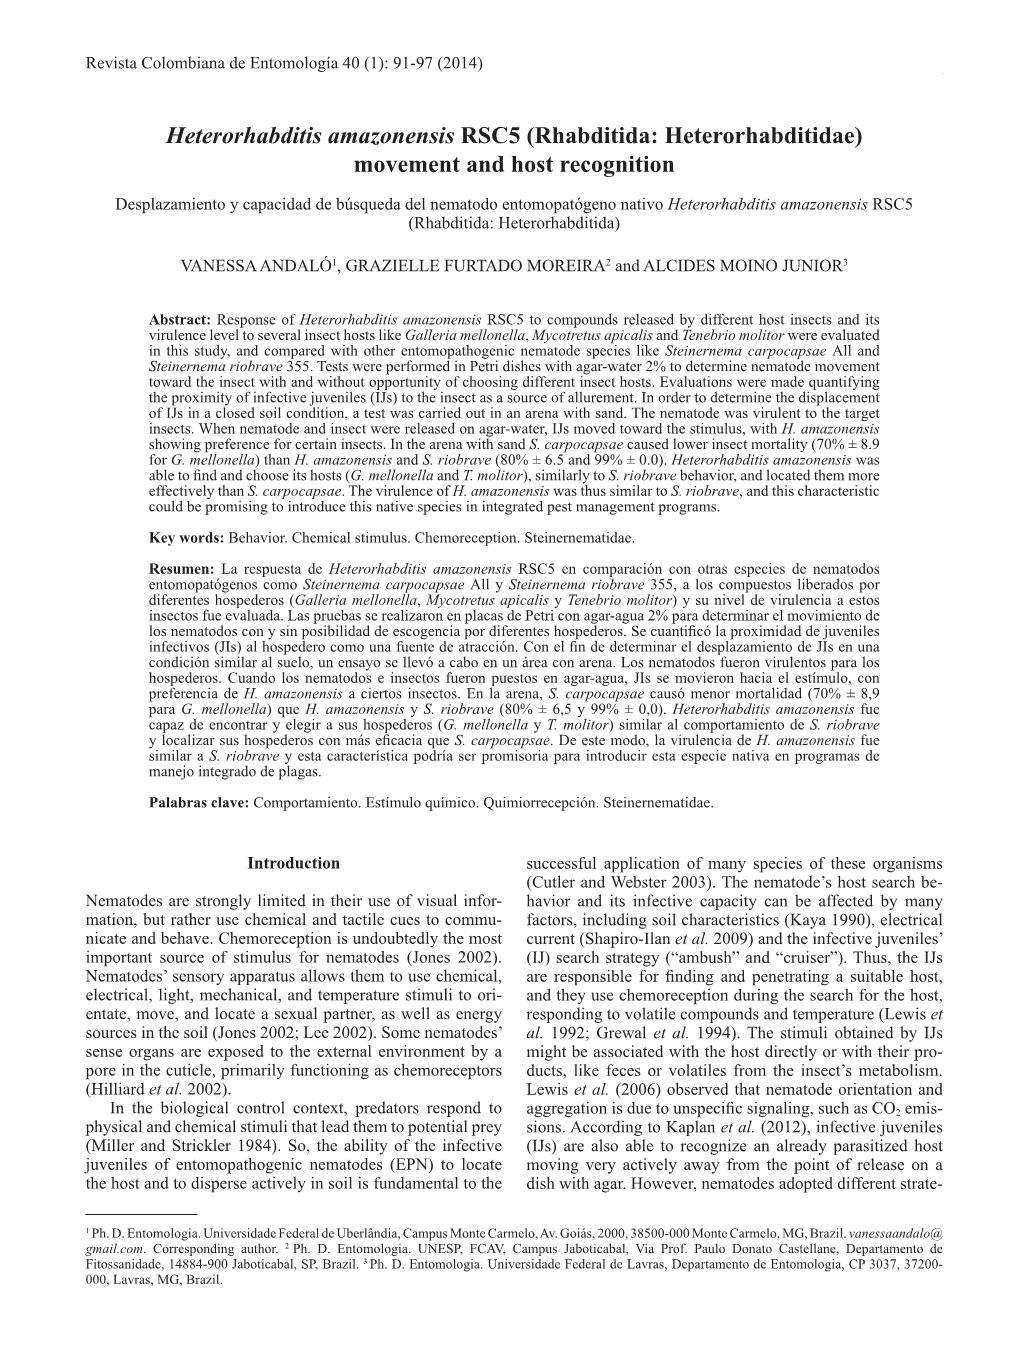 Heterorhabditis Amazonensis RSC5 (Rhabditida: Heterorhabditidae) Movement and Host Recognition